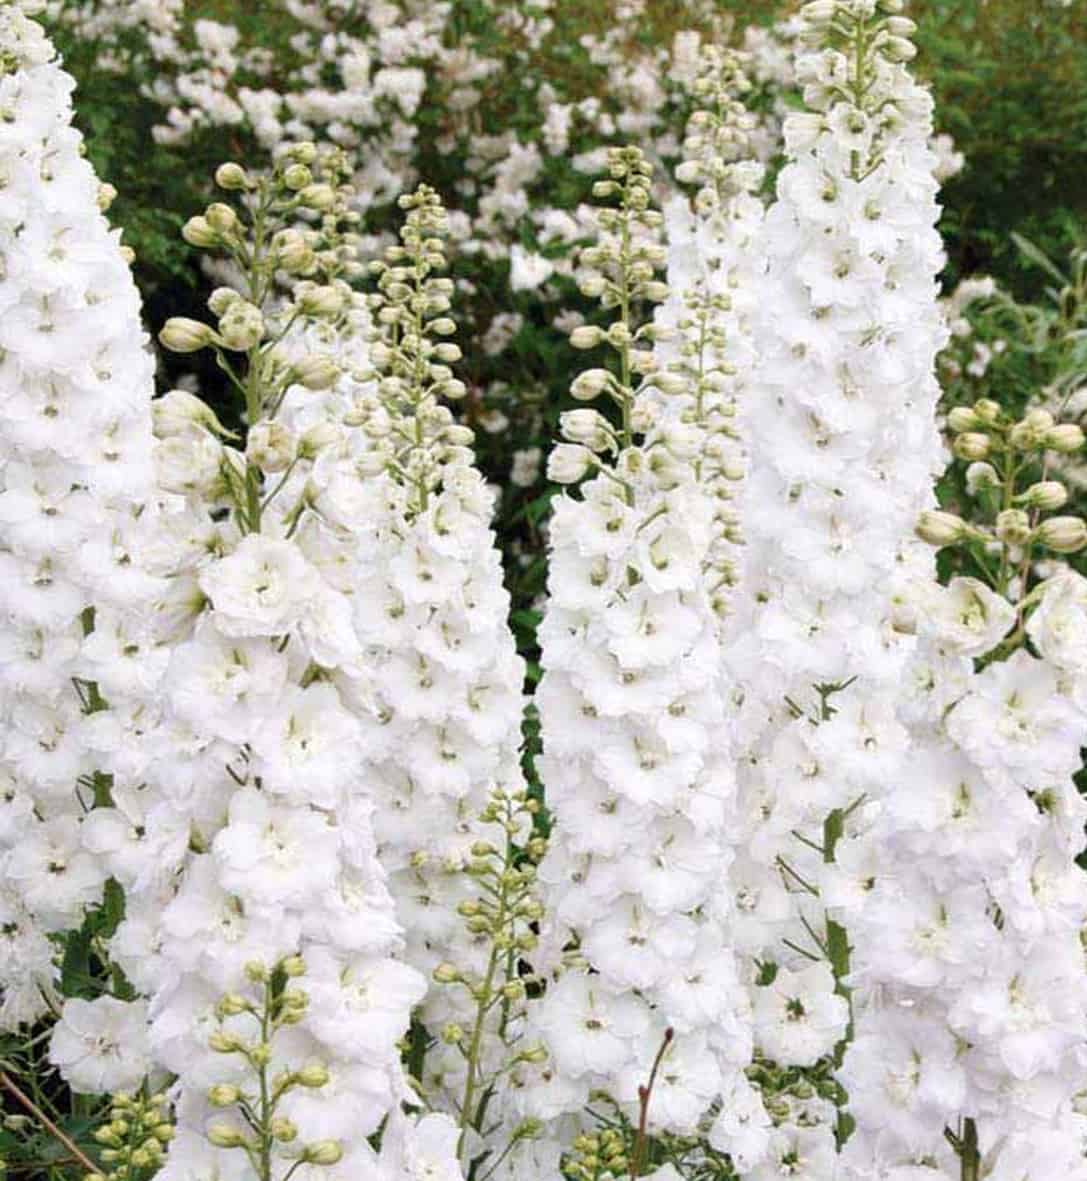 Delphinium White | Flower Seeds |Larkspur